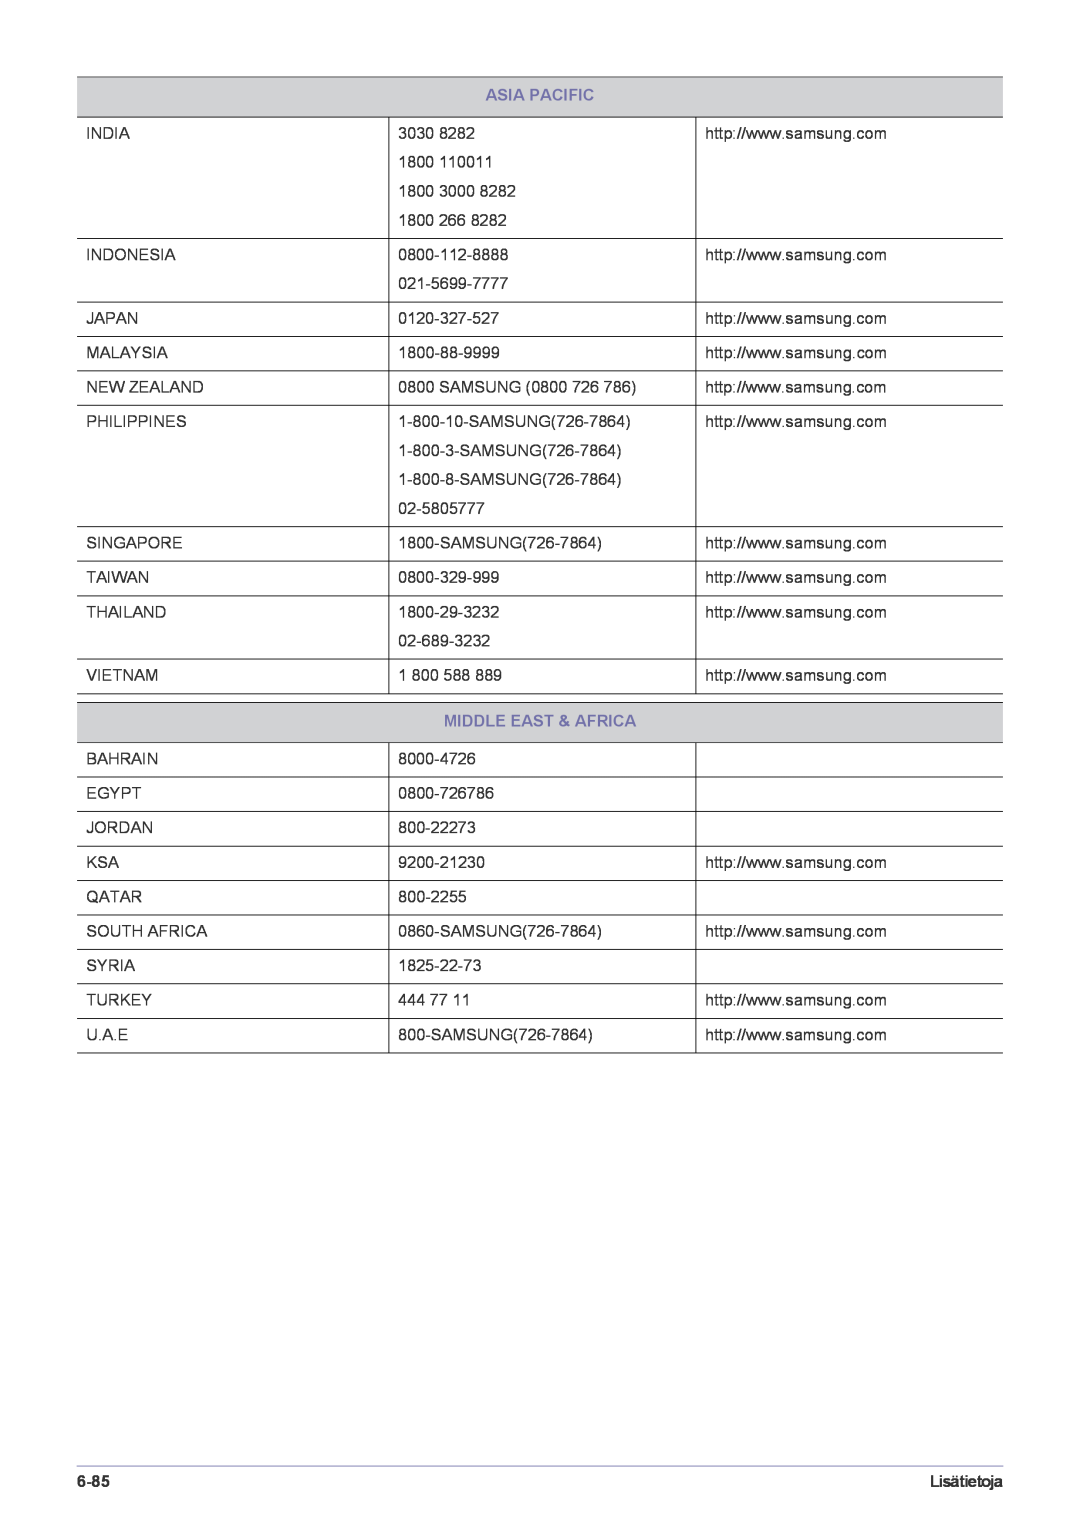 Samsung LS19CLASSUEN, LS22CBDMSV/EN, LS22CBUMBV/EN, LS19CLNSB/EN manual Asia Pacific, Middle East & Africa, Lisätietoja 